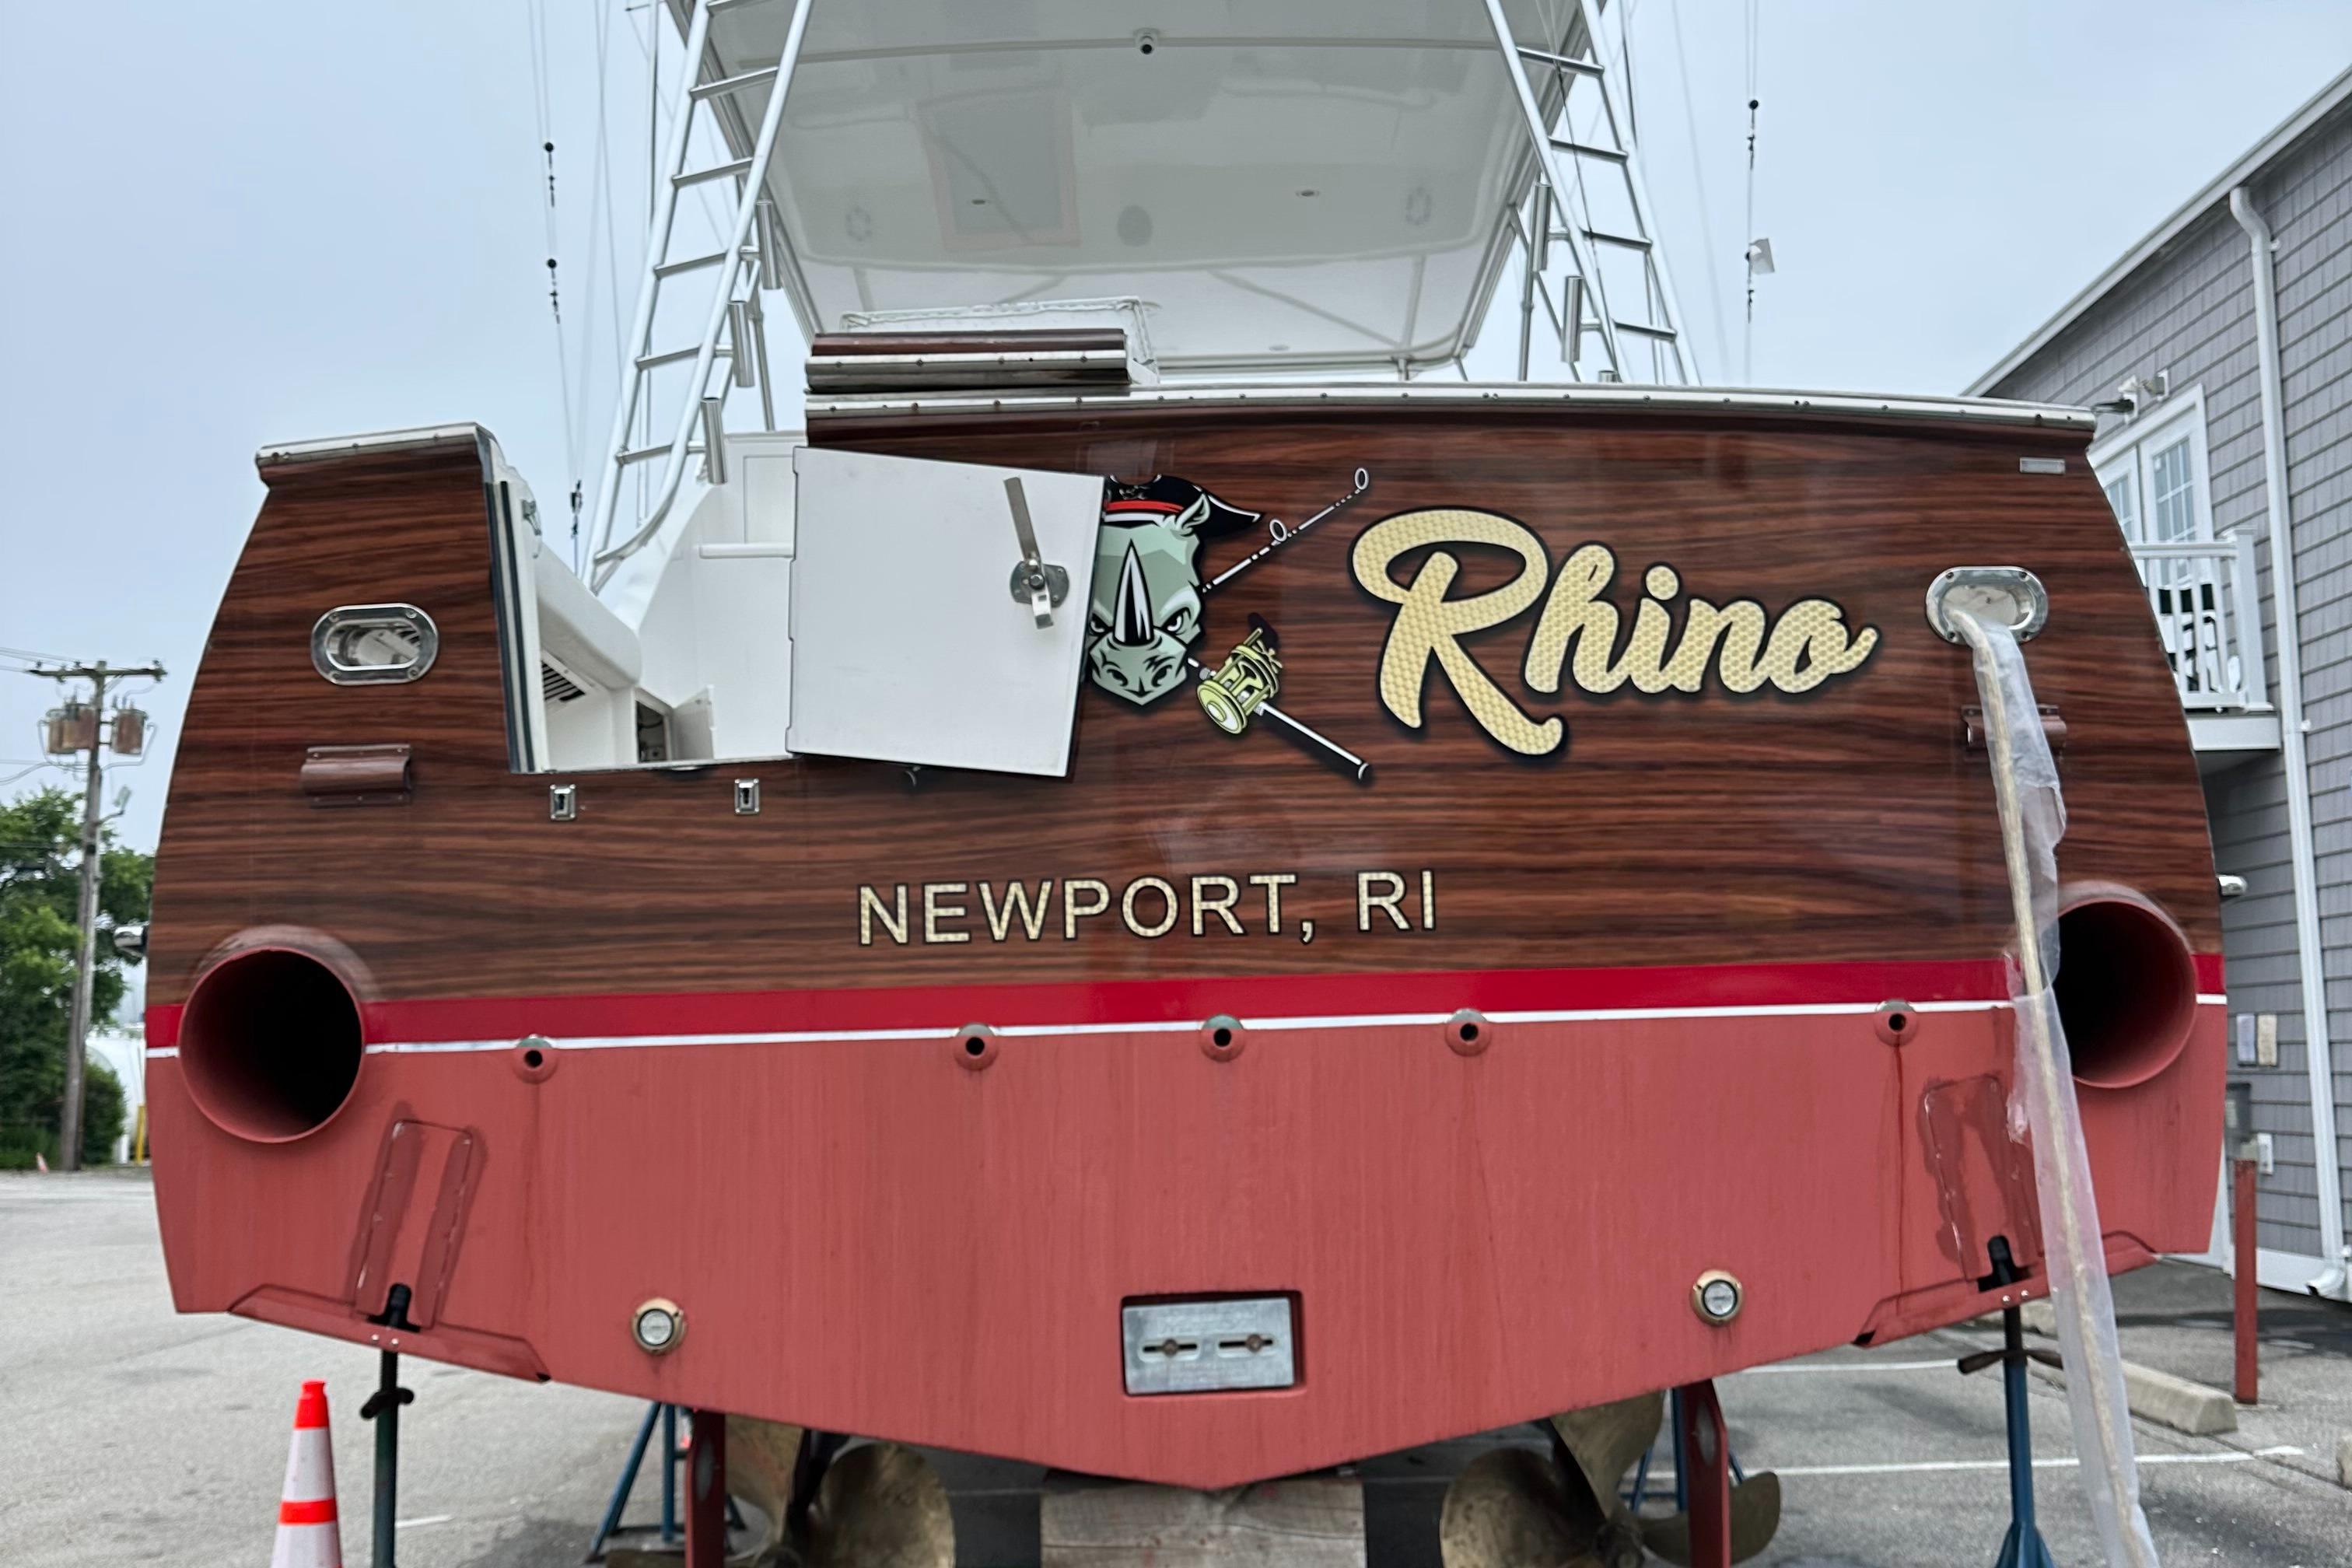 Reel Rhino Yacht for Sale  52 Buddy Davis Yachts Barrington, RI